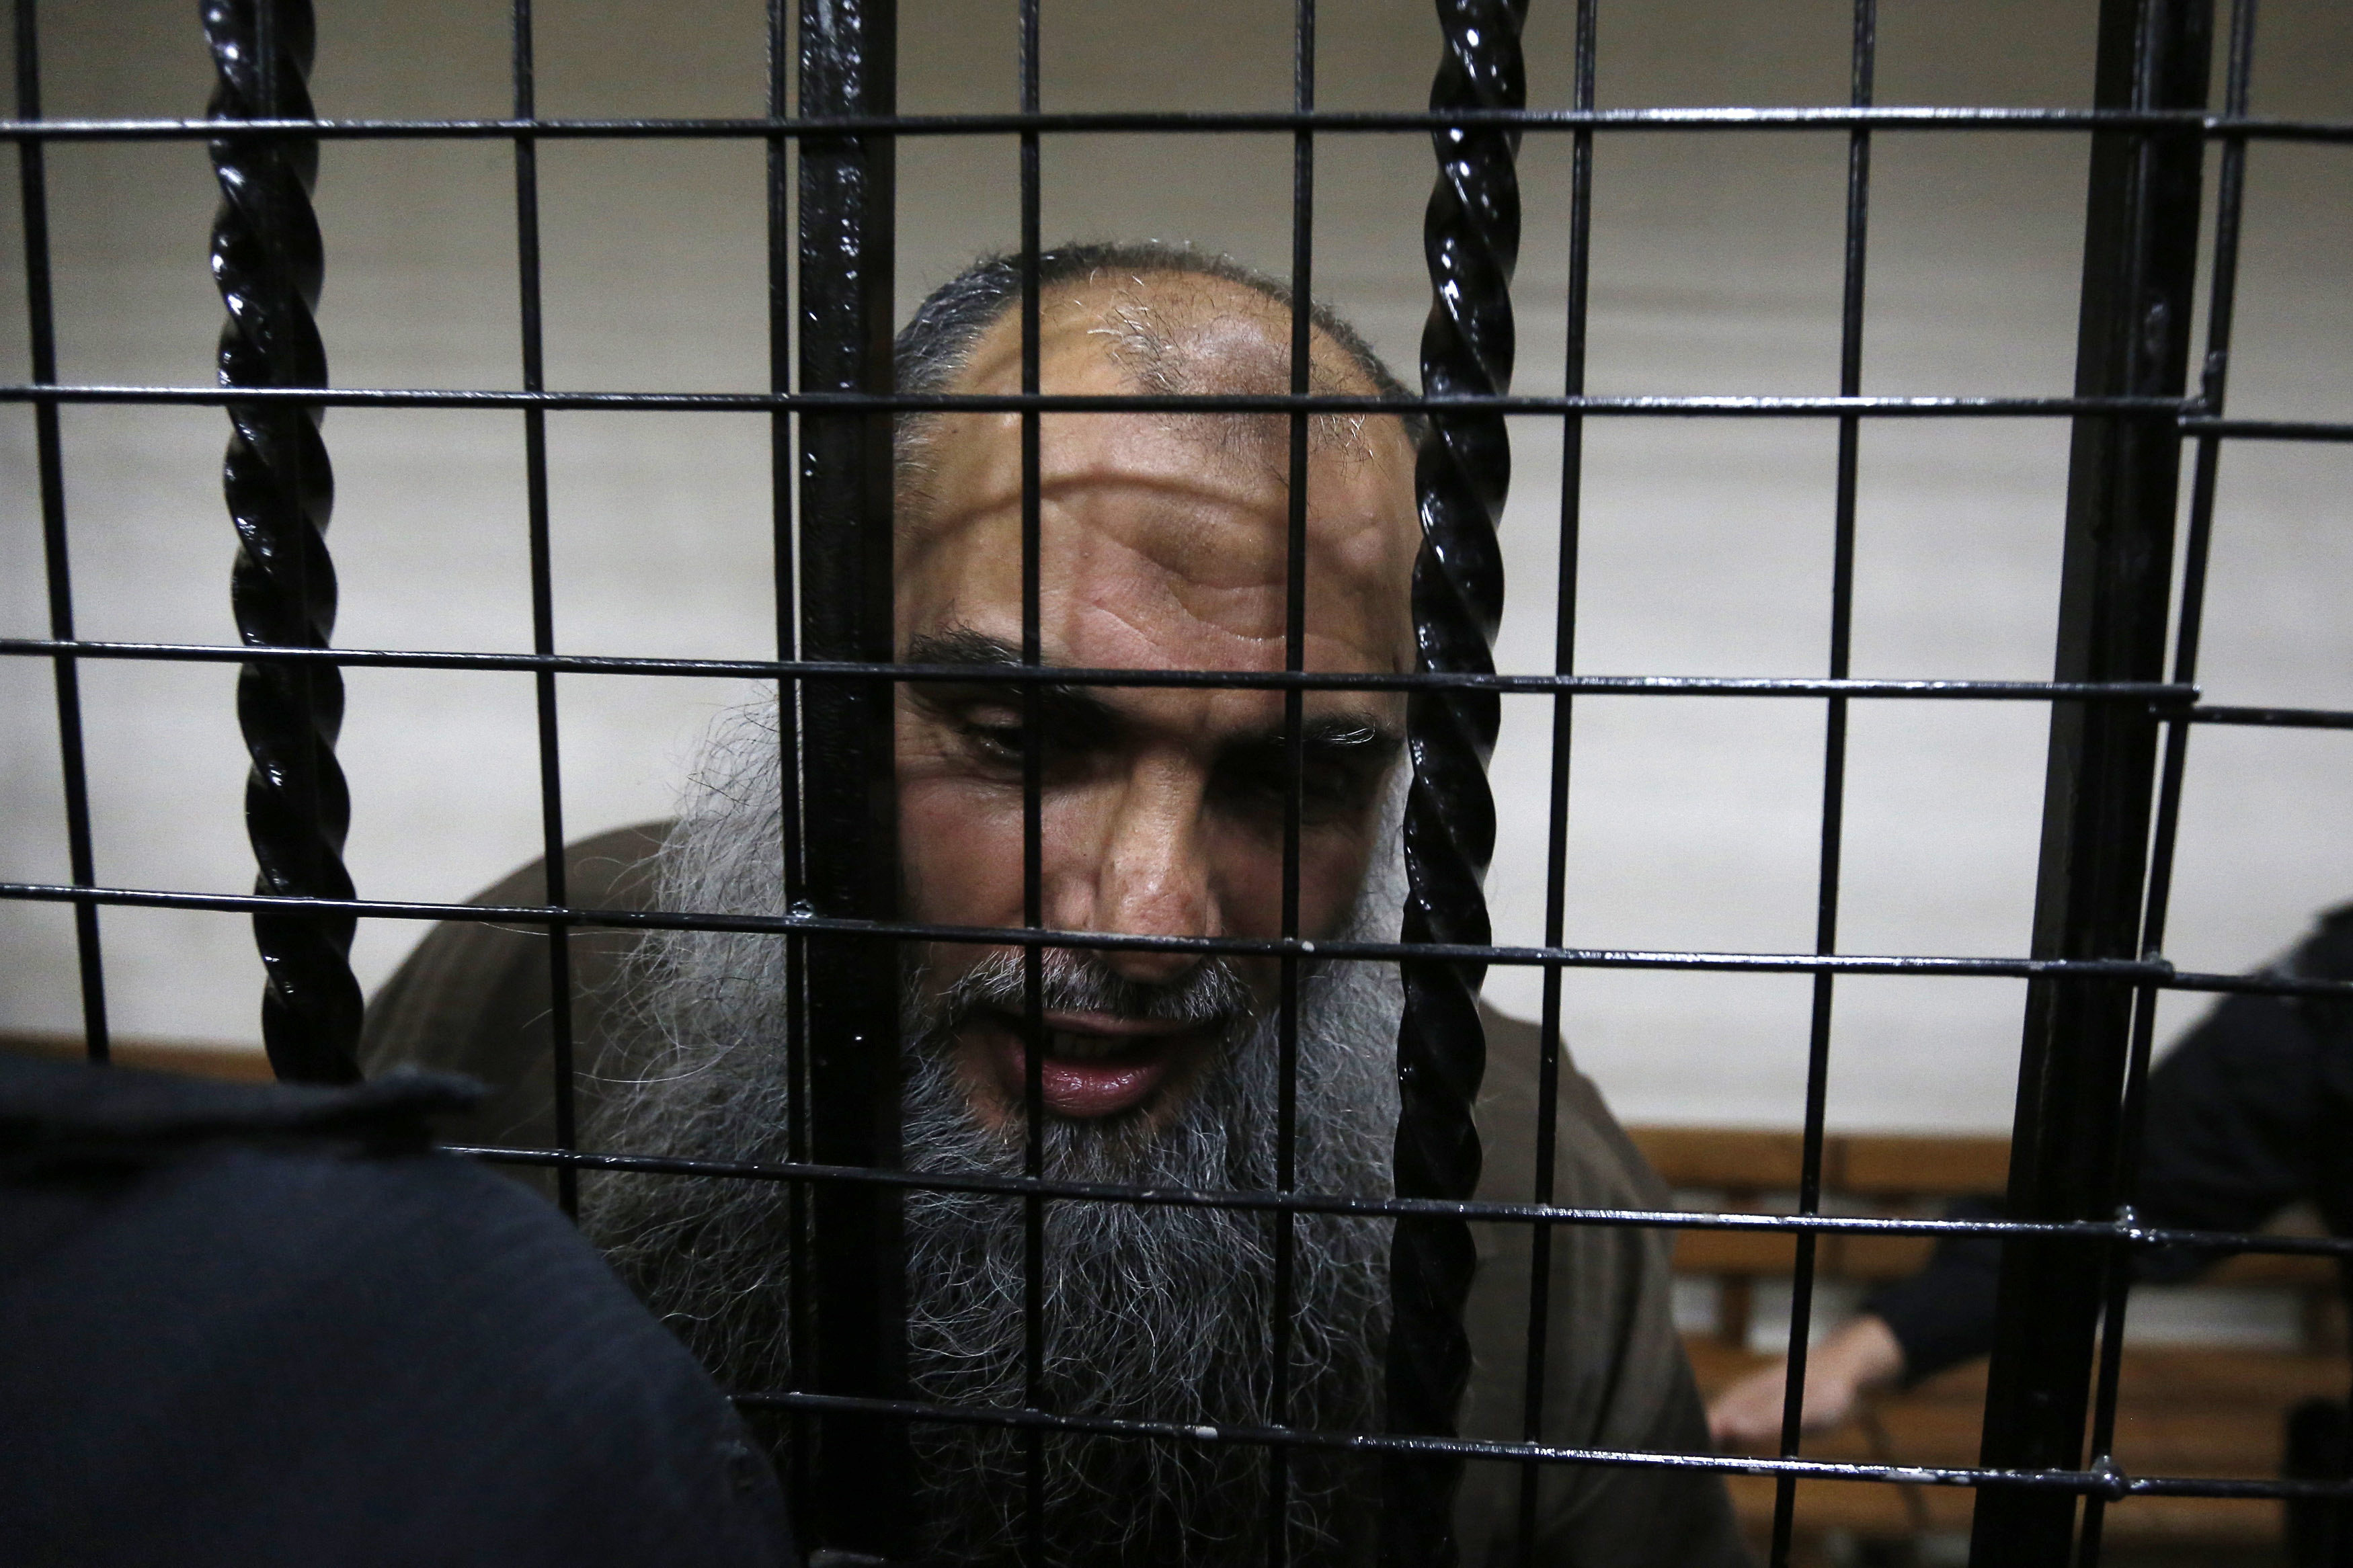 Cleric Abu Qatada Cleared of Terror Plot, Freed by Jordan Court